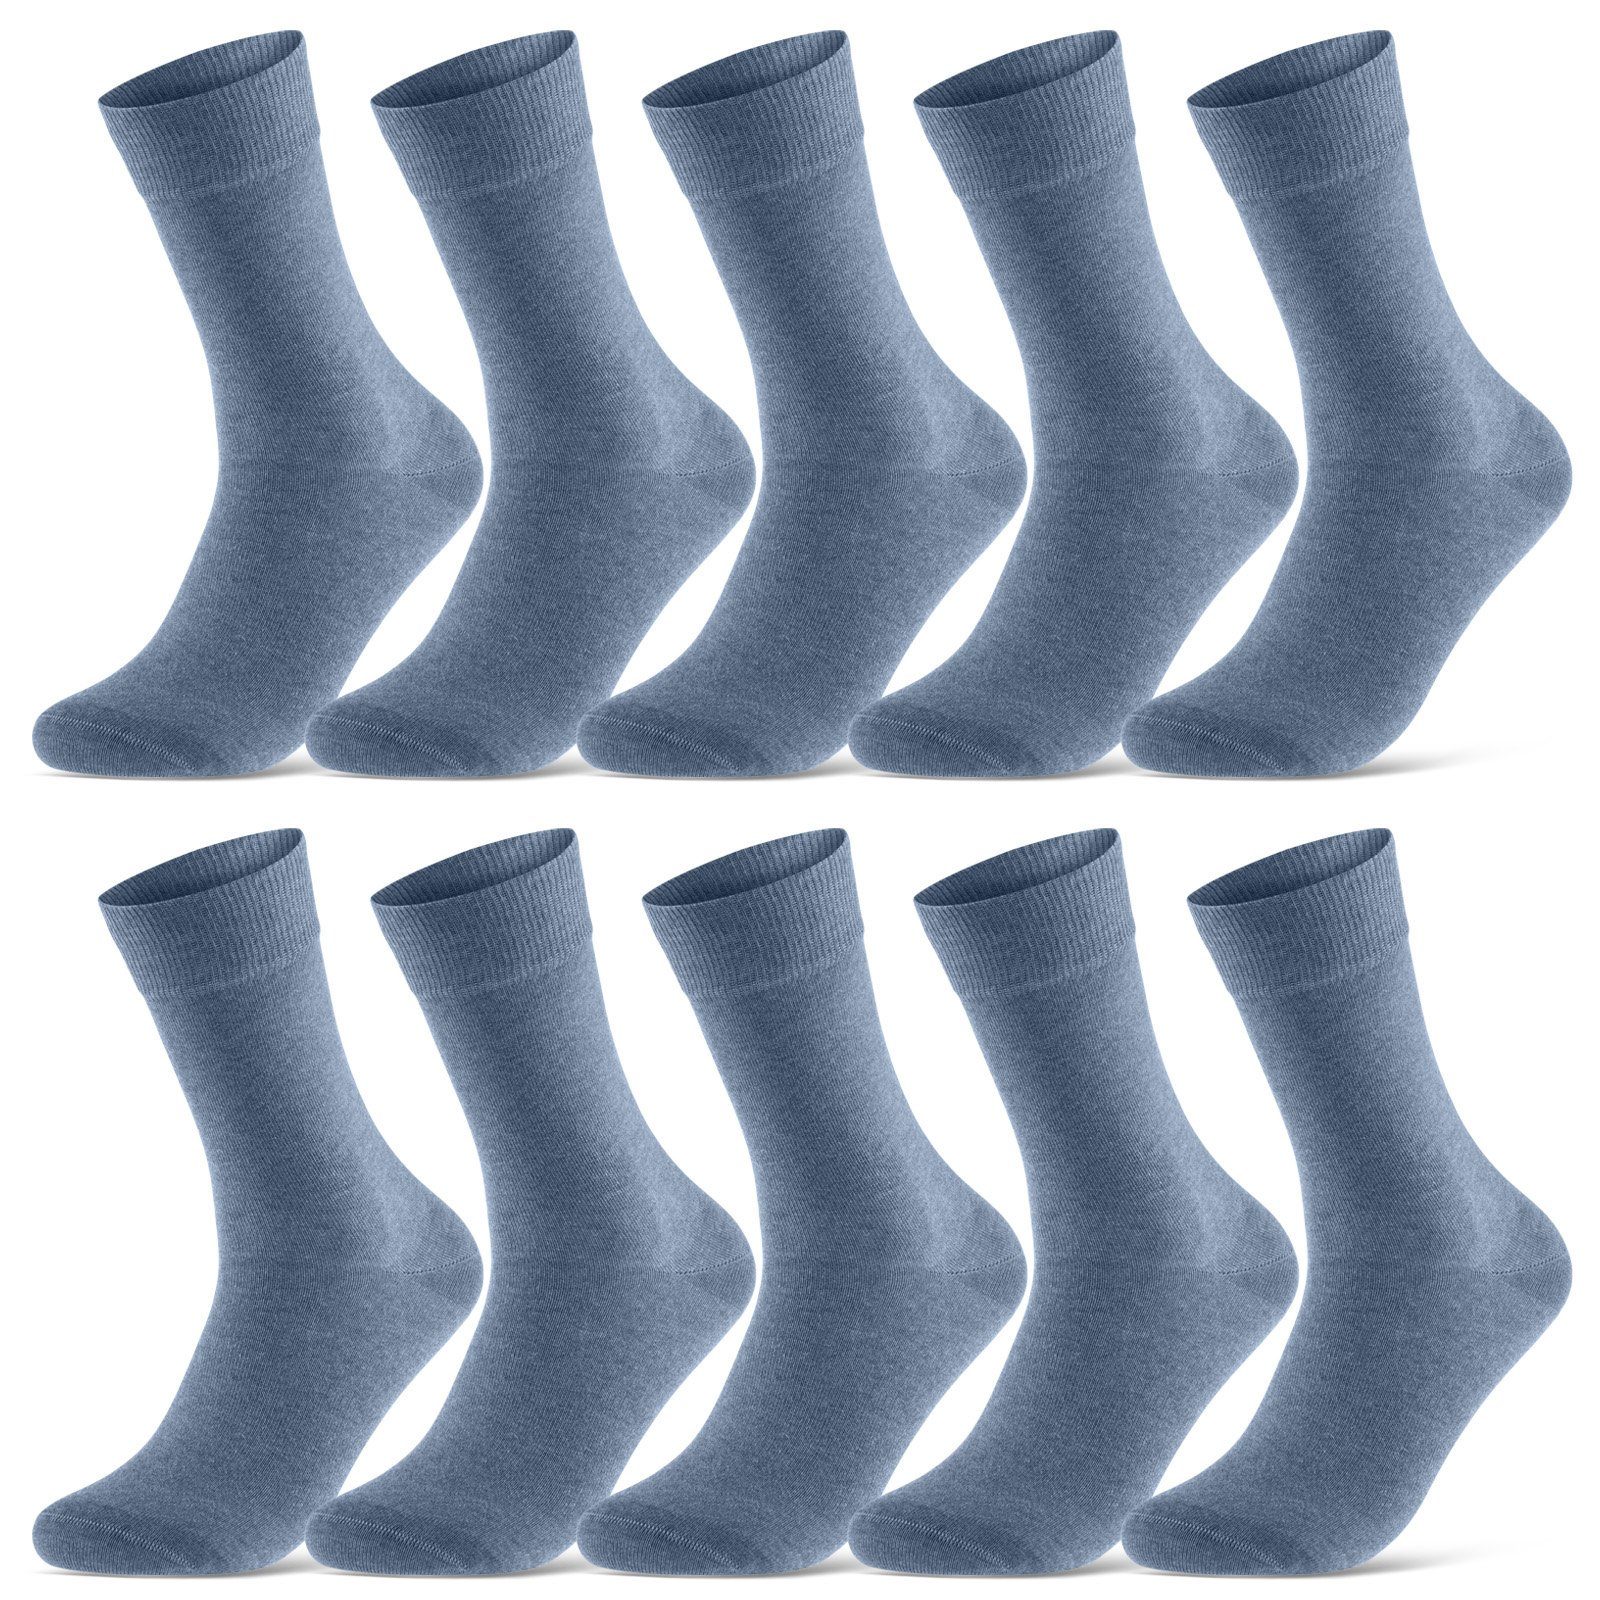 sockenkauf24 Socken 10 Paar Damen & Herren Socken Business Socken Baumwolle (Jeans, 39-42) mit Komfortbund (Basicline) - 70201T